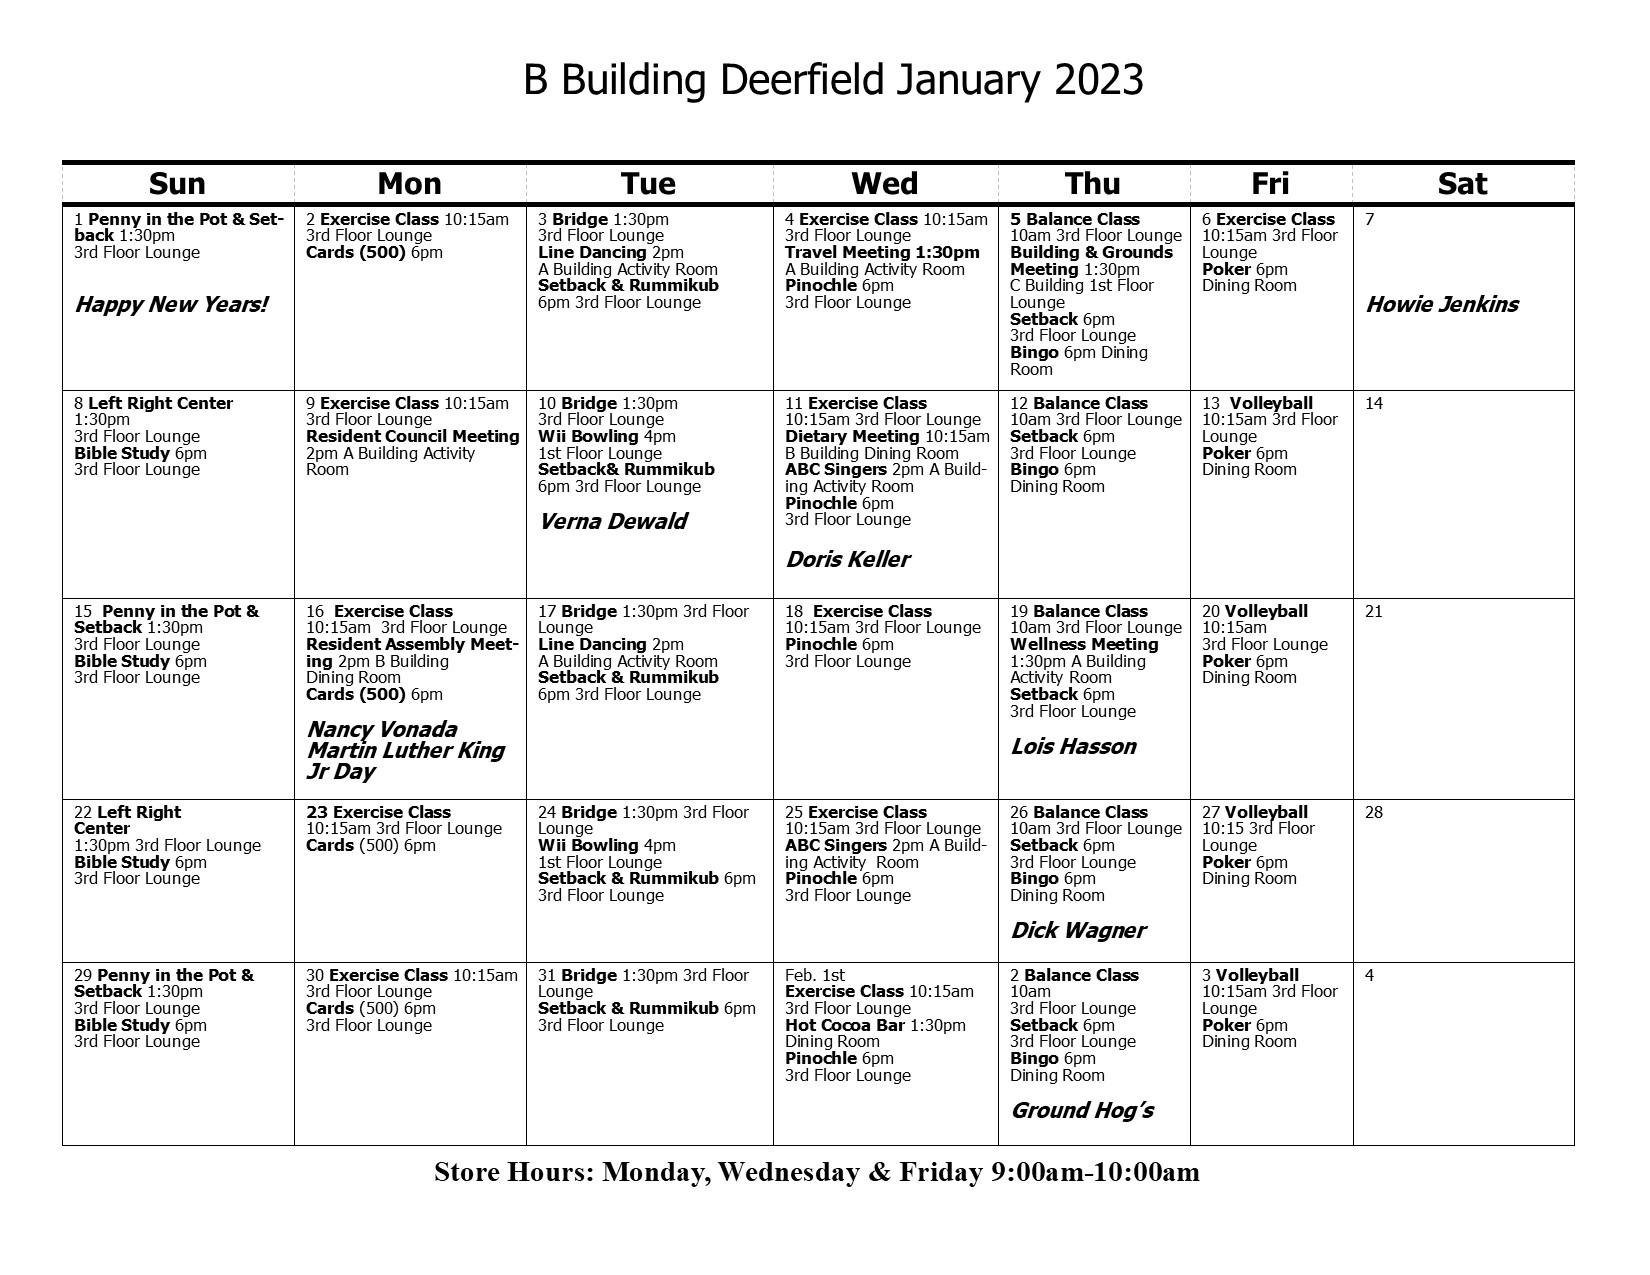 B Building Calendar January 2023